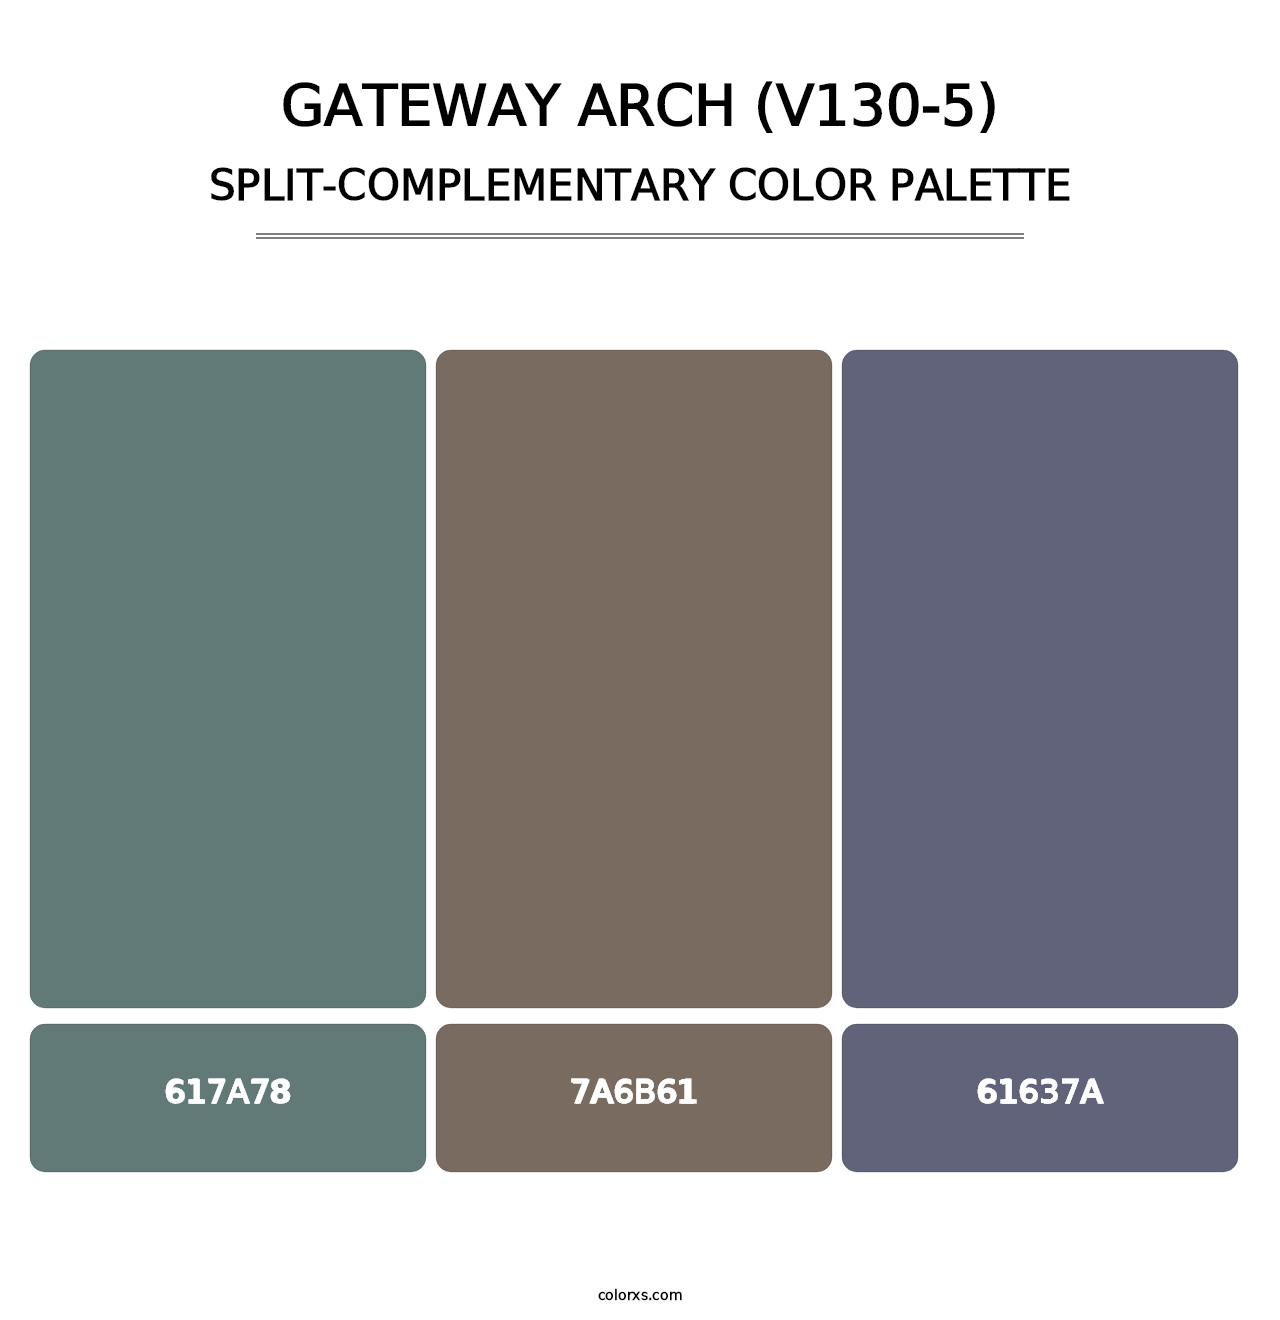 Gateway Arch (V130-5) - Split-Complementary Color Palette